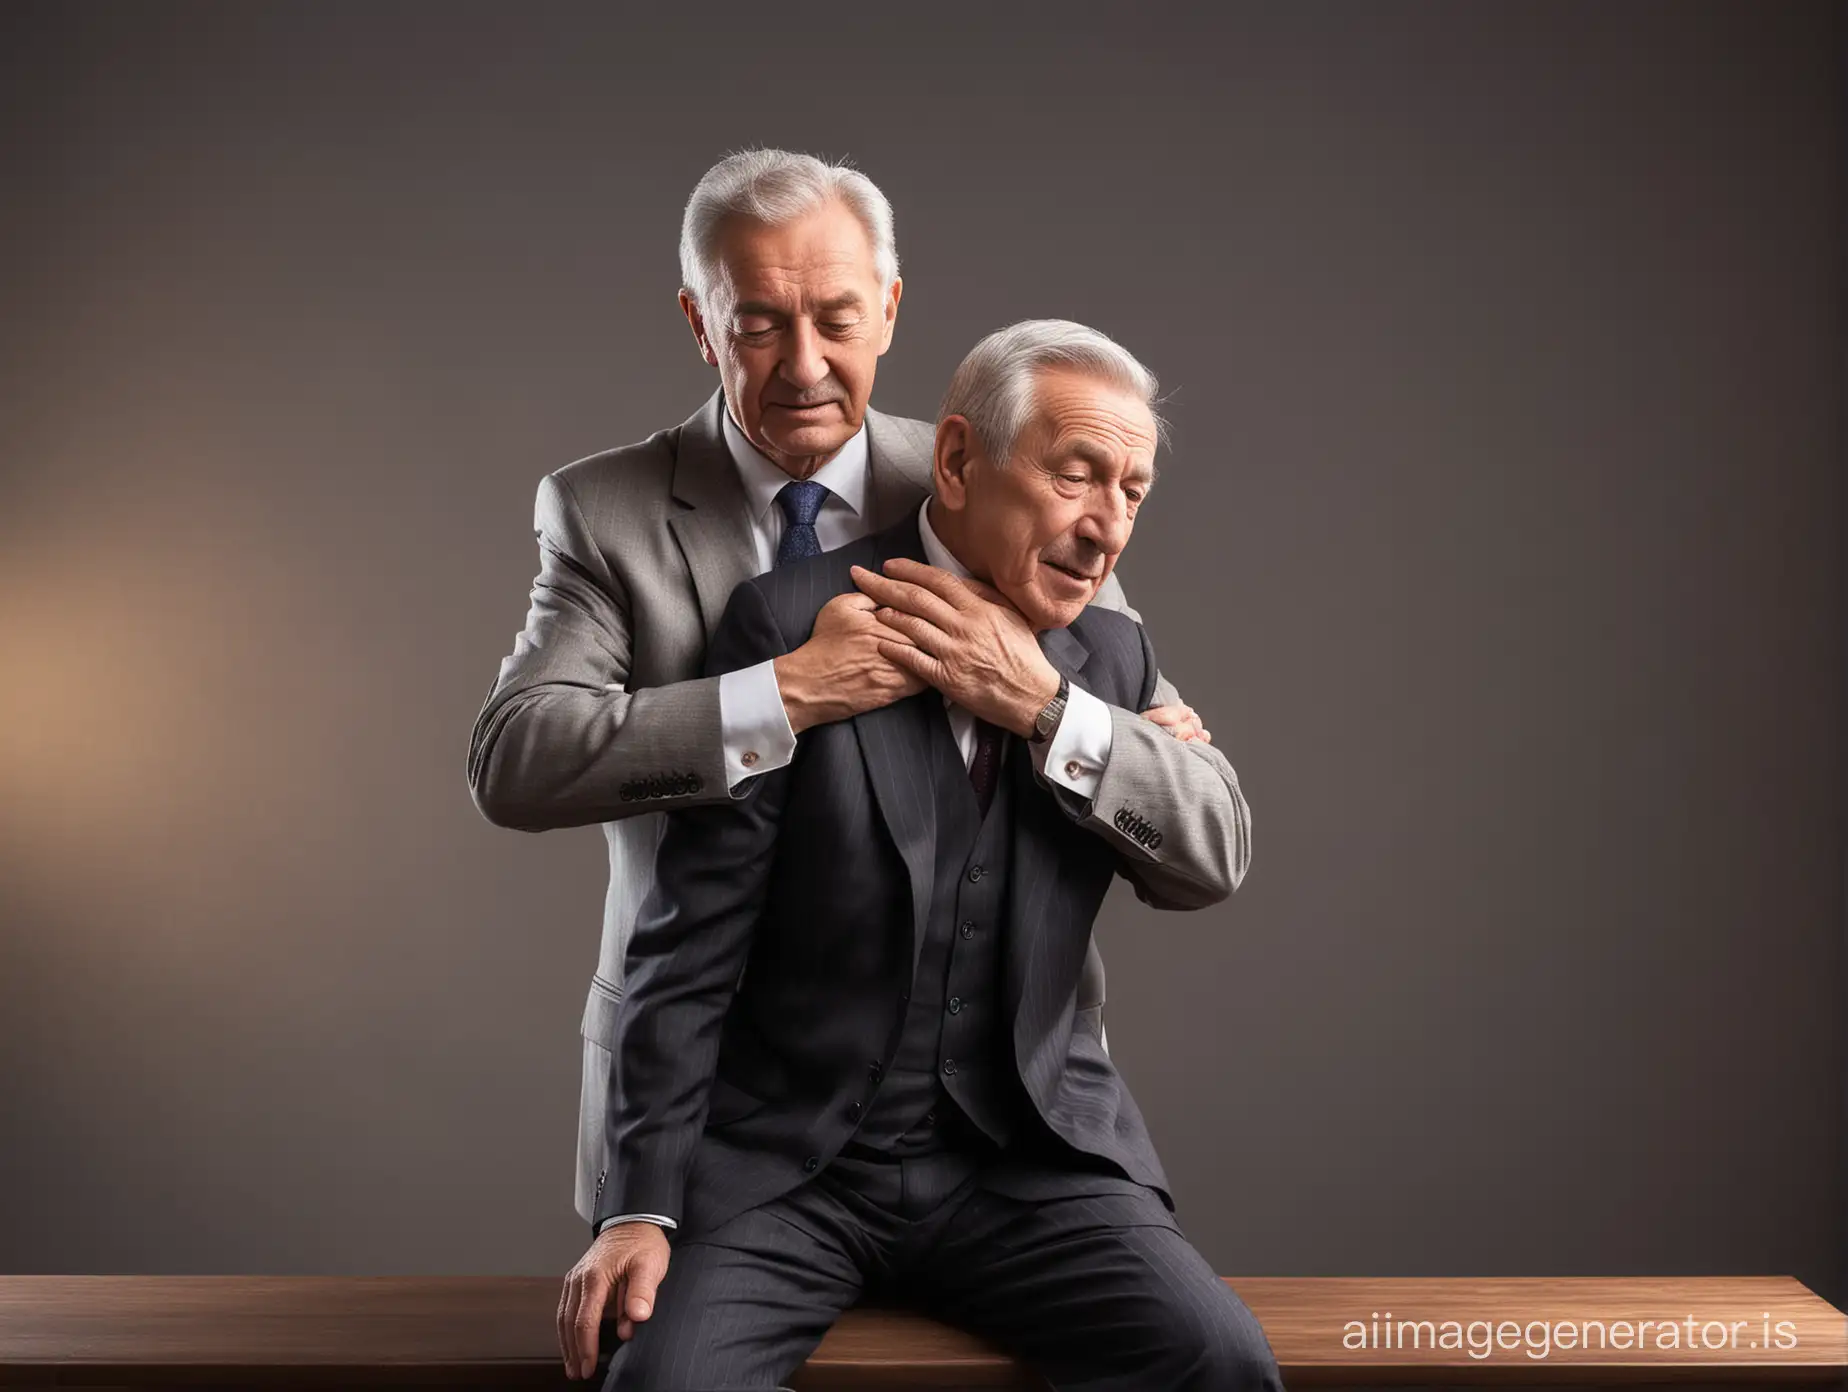 An elderly businessman placing his hands on another elderly man's breast, both men kneeling, full body shot, full body shot, office background, dramatic lighting